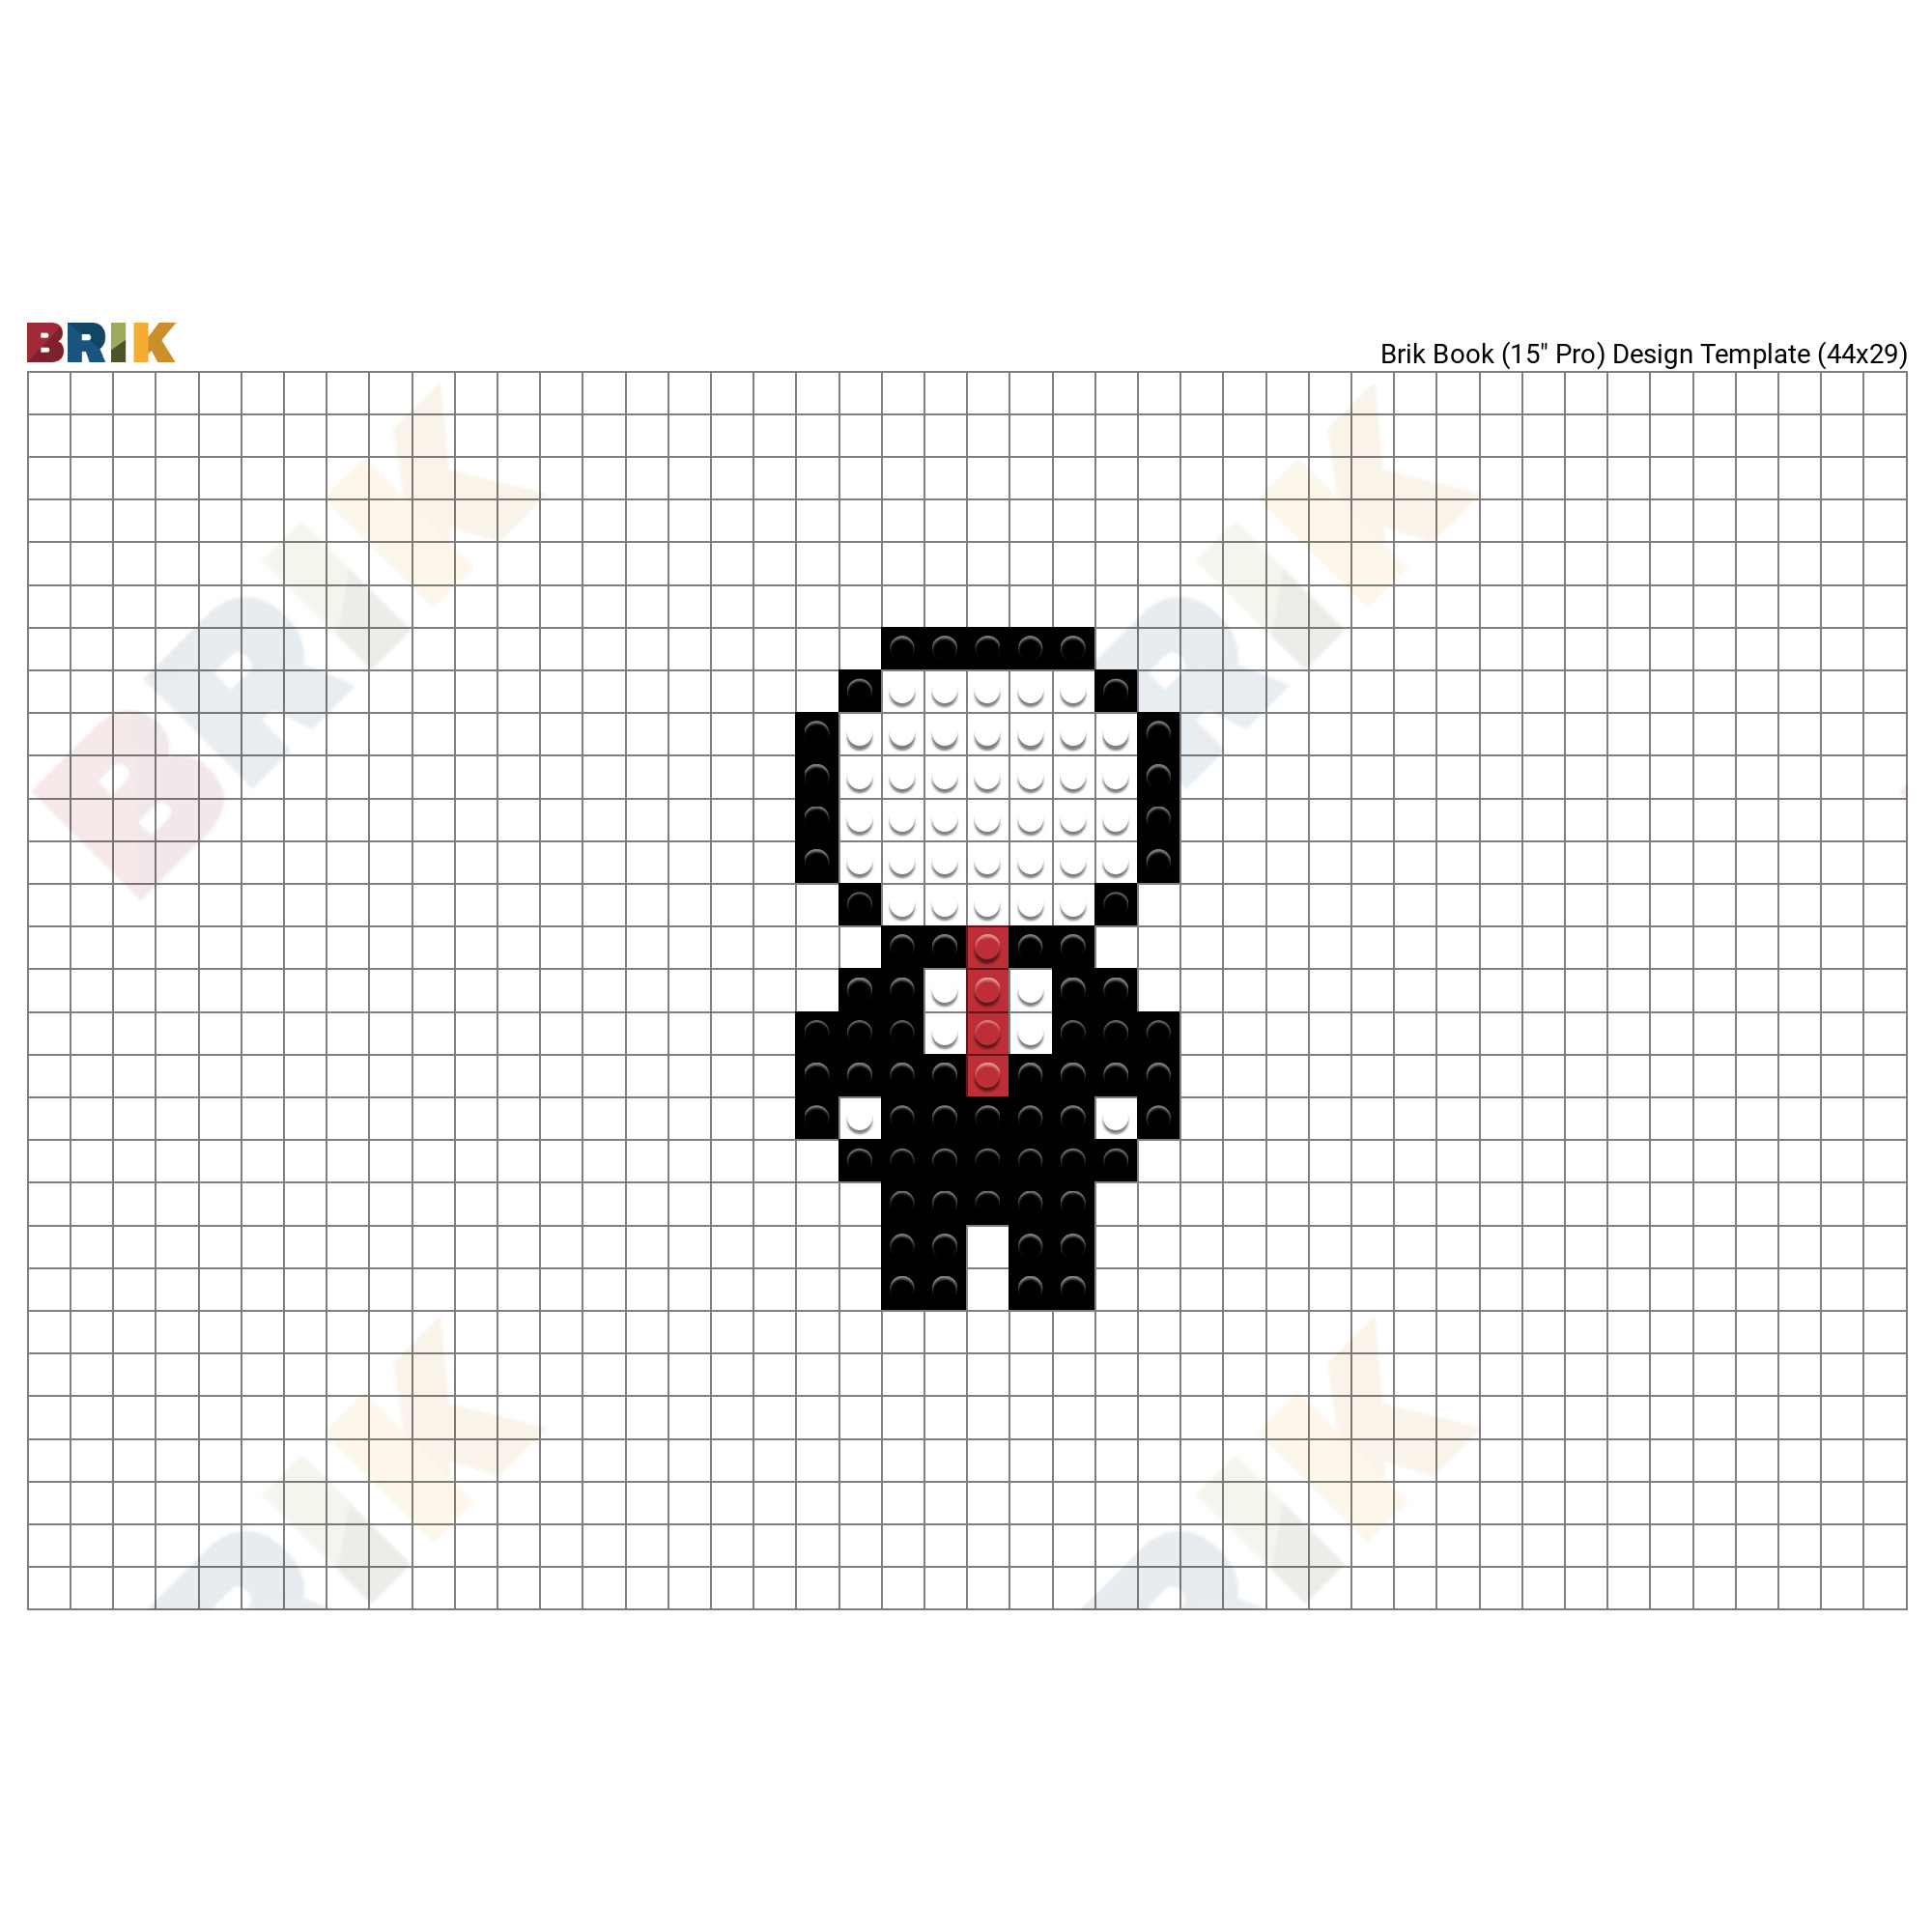 slender man pixel art minecraft